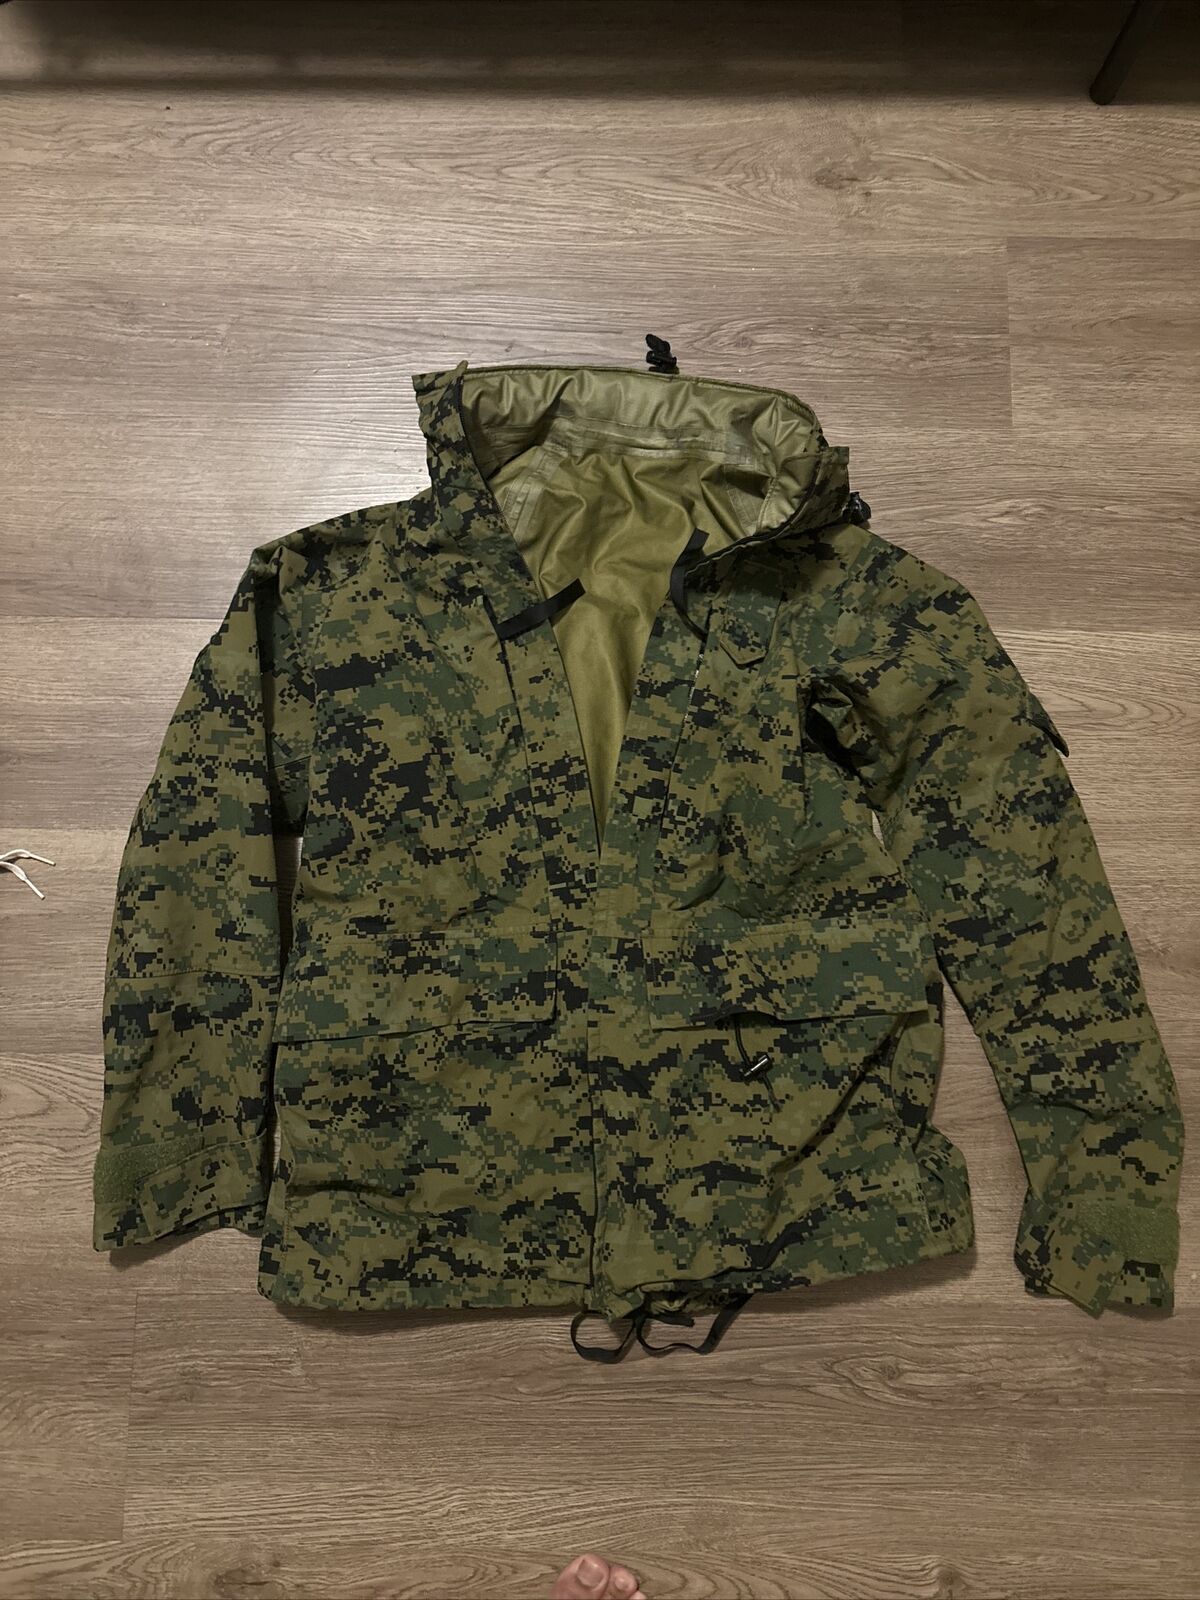 USMC GoreTex Jacket Parka Woodland Camouflage MARPAT APEC Gen II Medium Regular